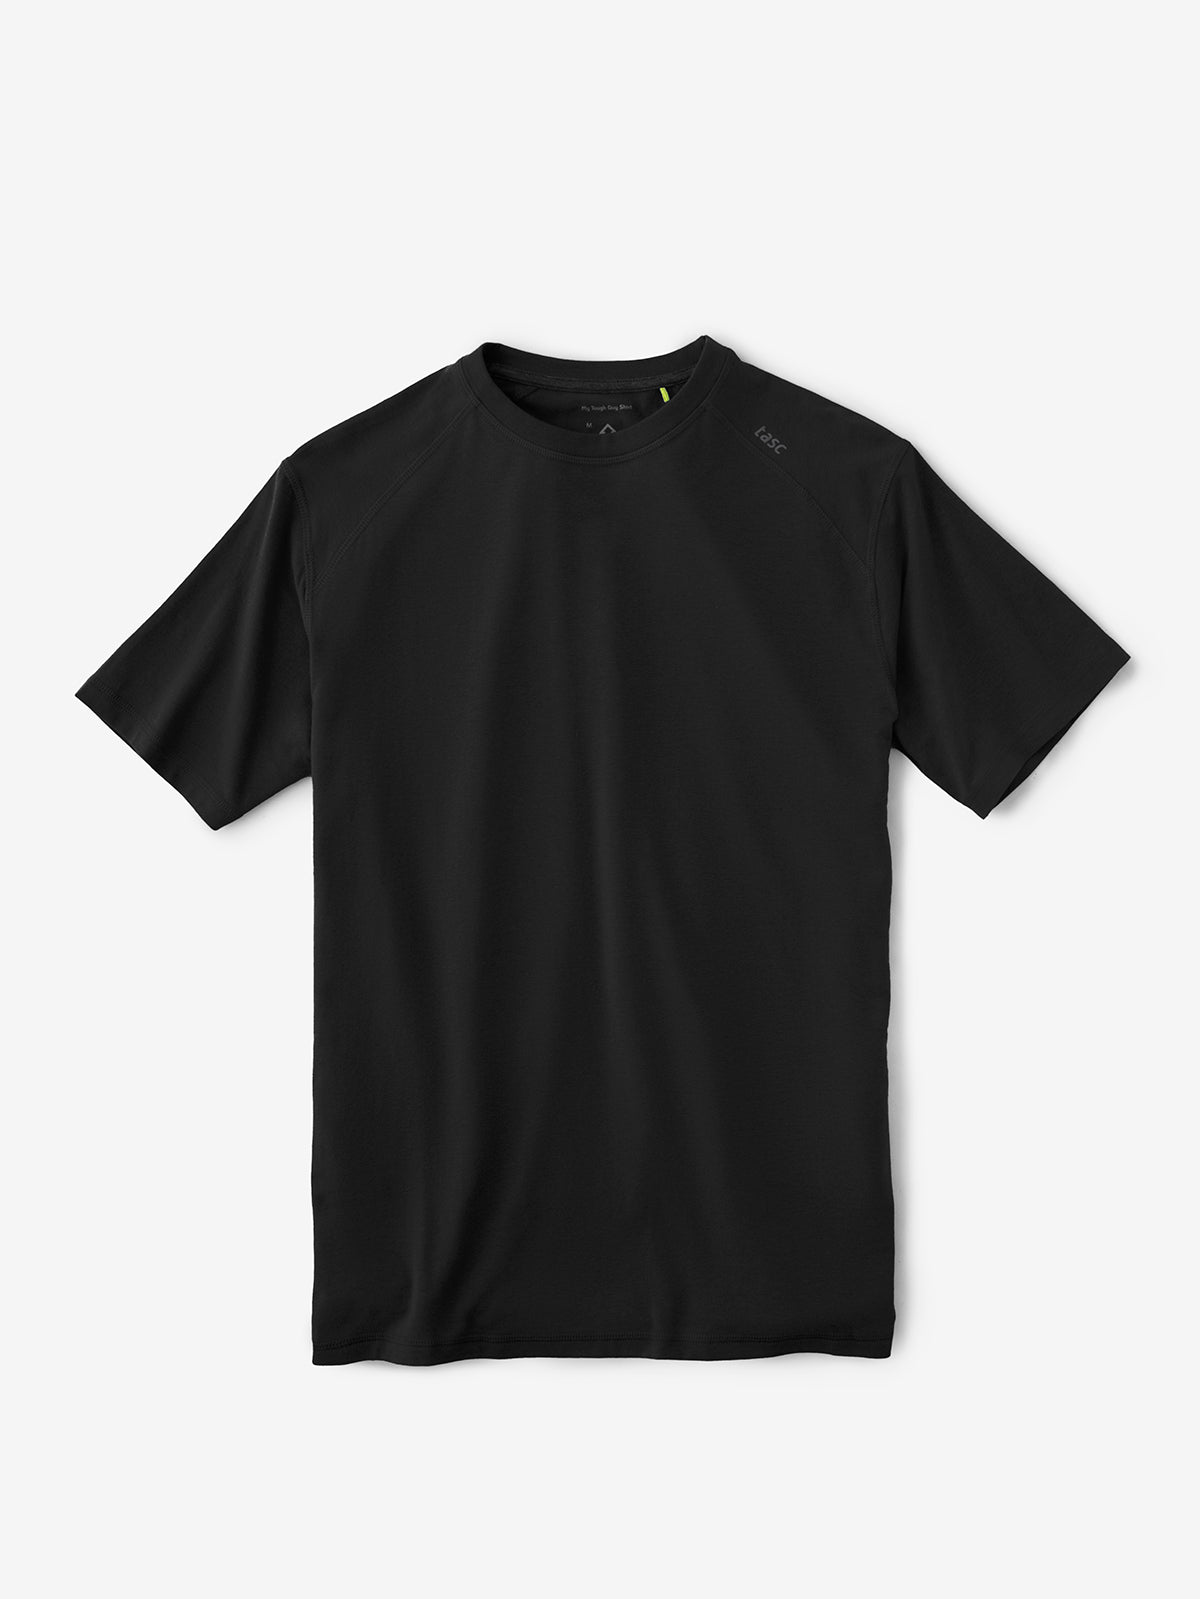 Carrollton Fitness T-Shirt - Core (Black)